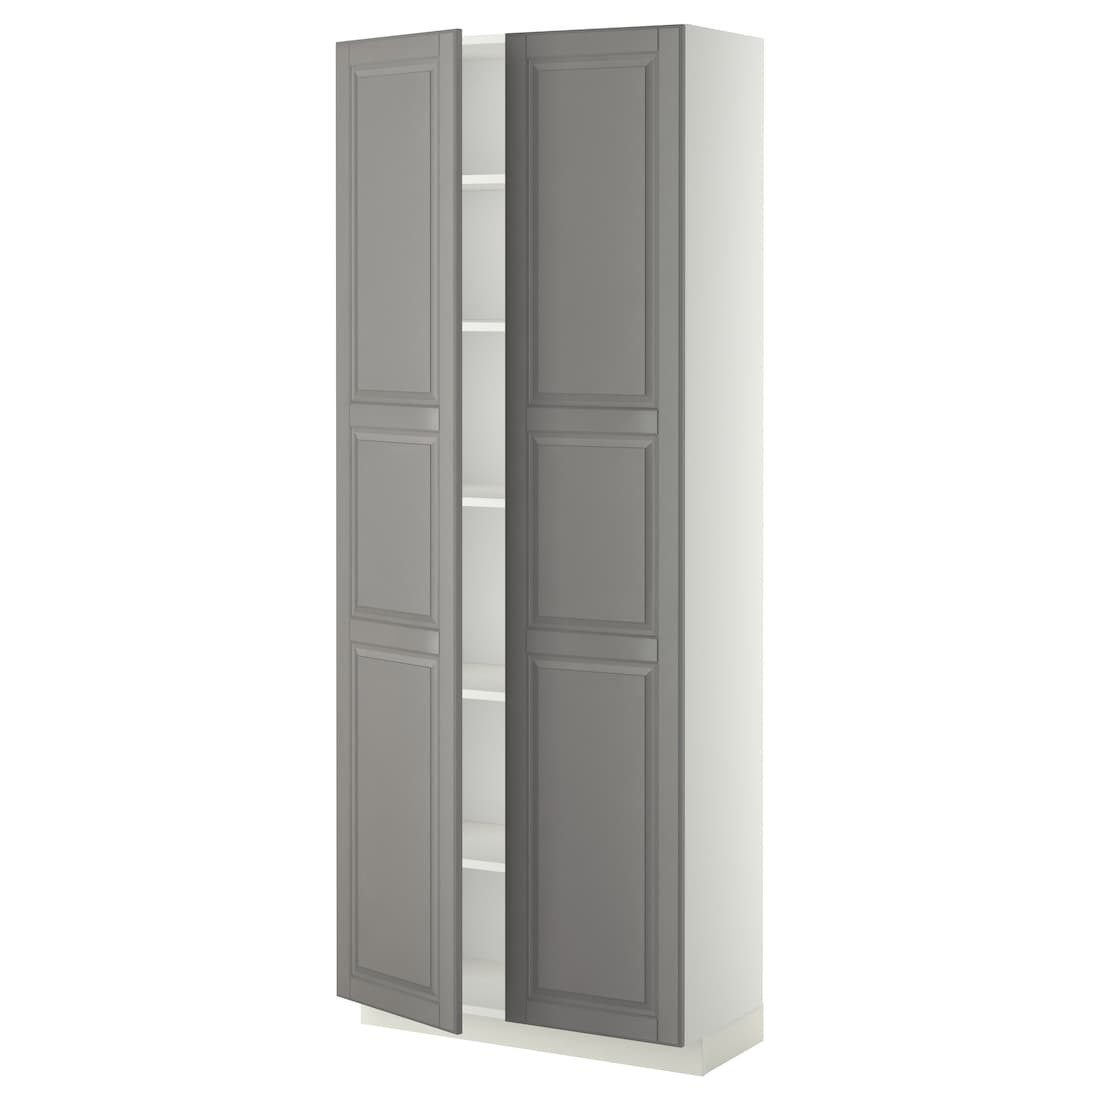 METOD МЕТОД Высокий шкаф с полками, белый / Bodbyn серый, 80x37x200 см